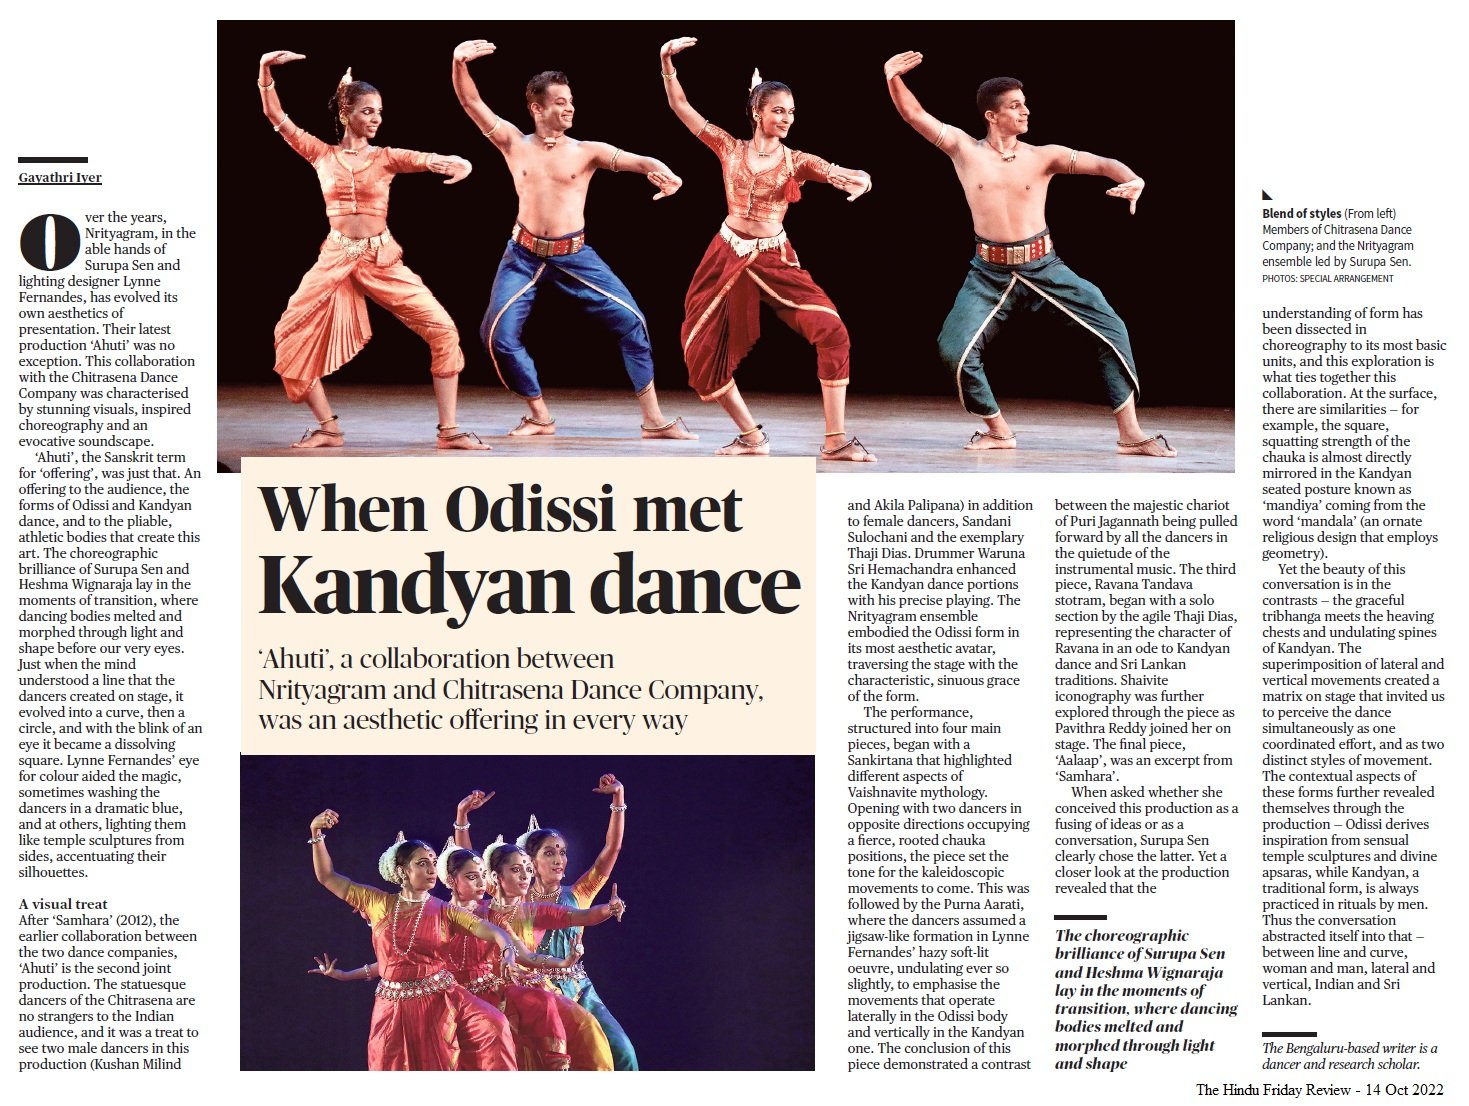 When Odissi met Kandyan dance - Gayathri Iyer